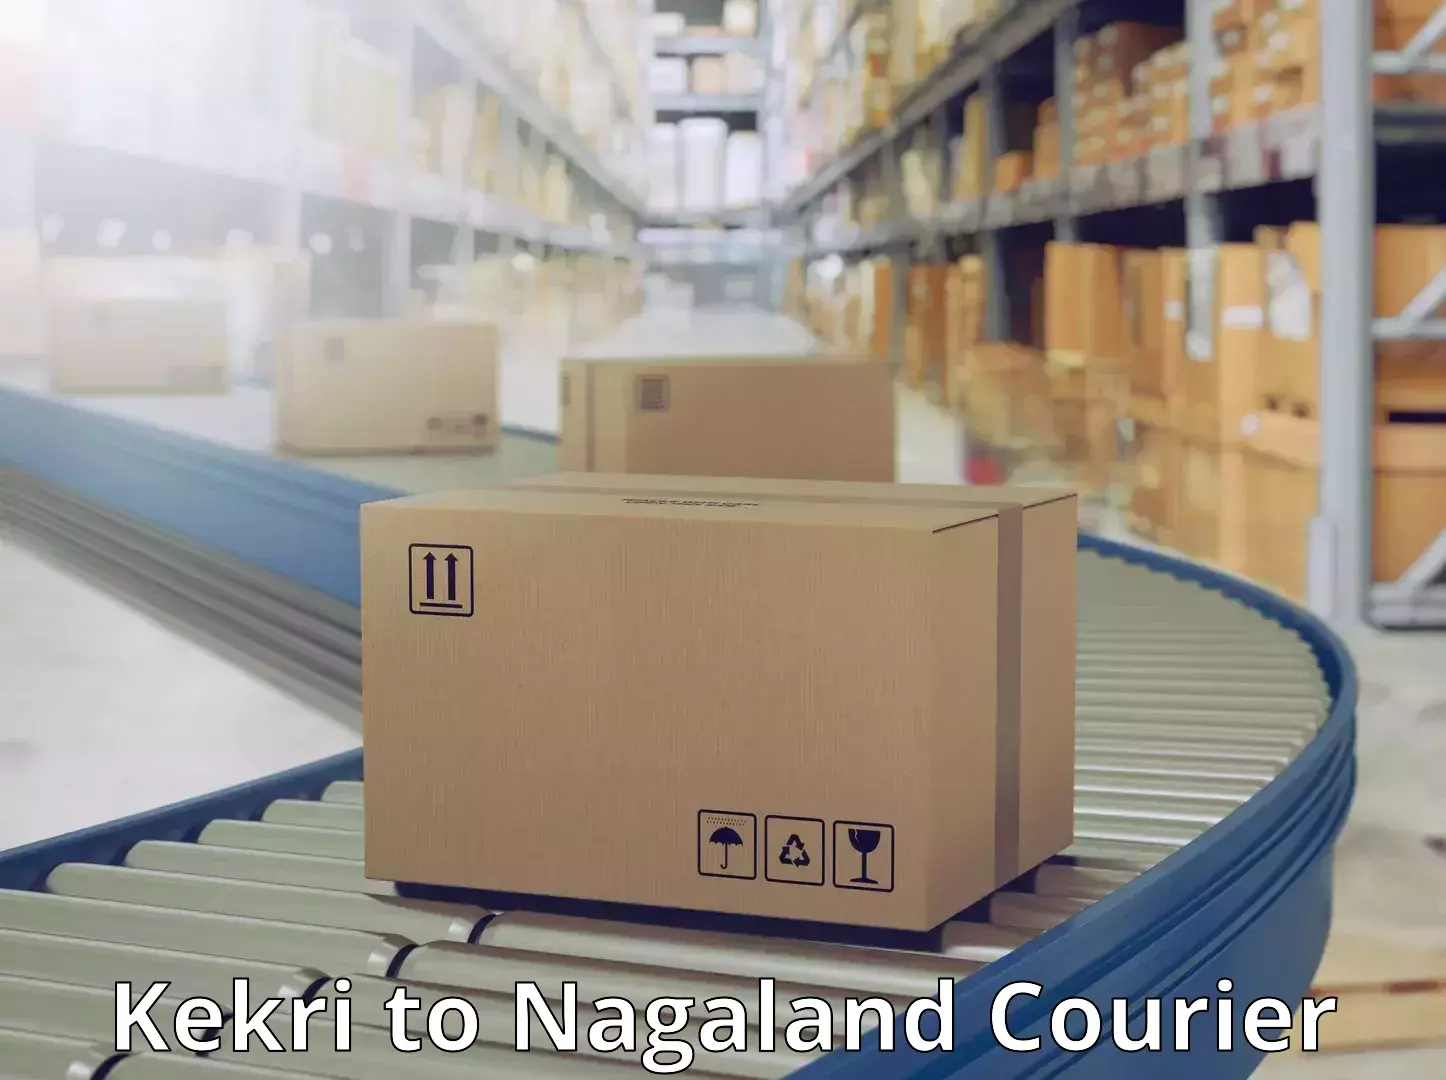 Easy return solutions Kekri to Nagaland